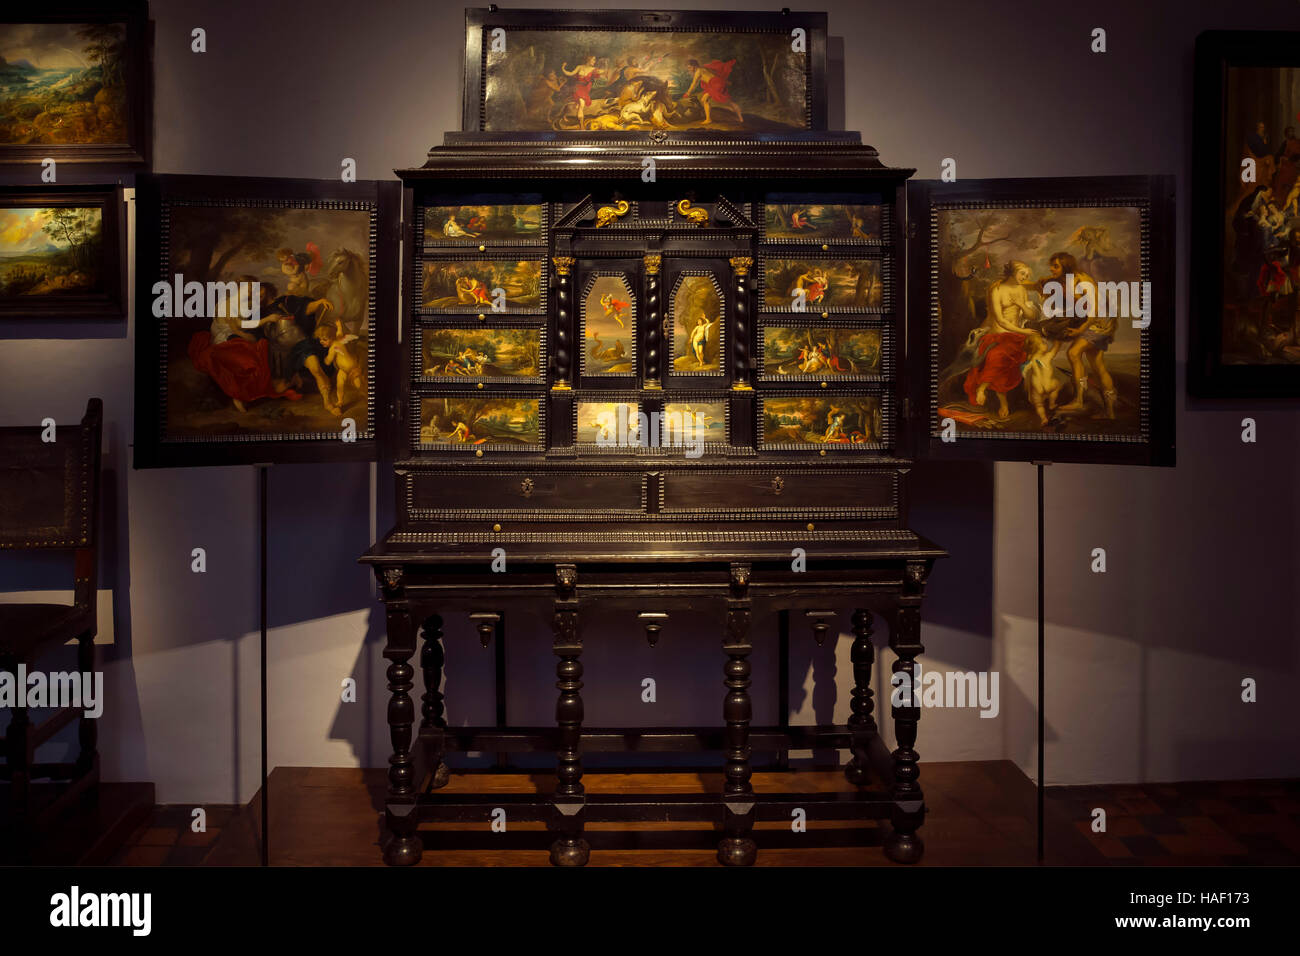 Cabinet de curiosités, vers 1640, musée rubenshuis, Maison de Rubens, Peter Paul Rubens, Anvers, Belgique, Europe Banque D'Images